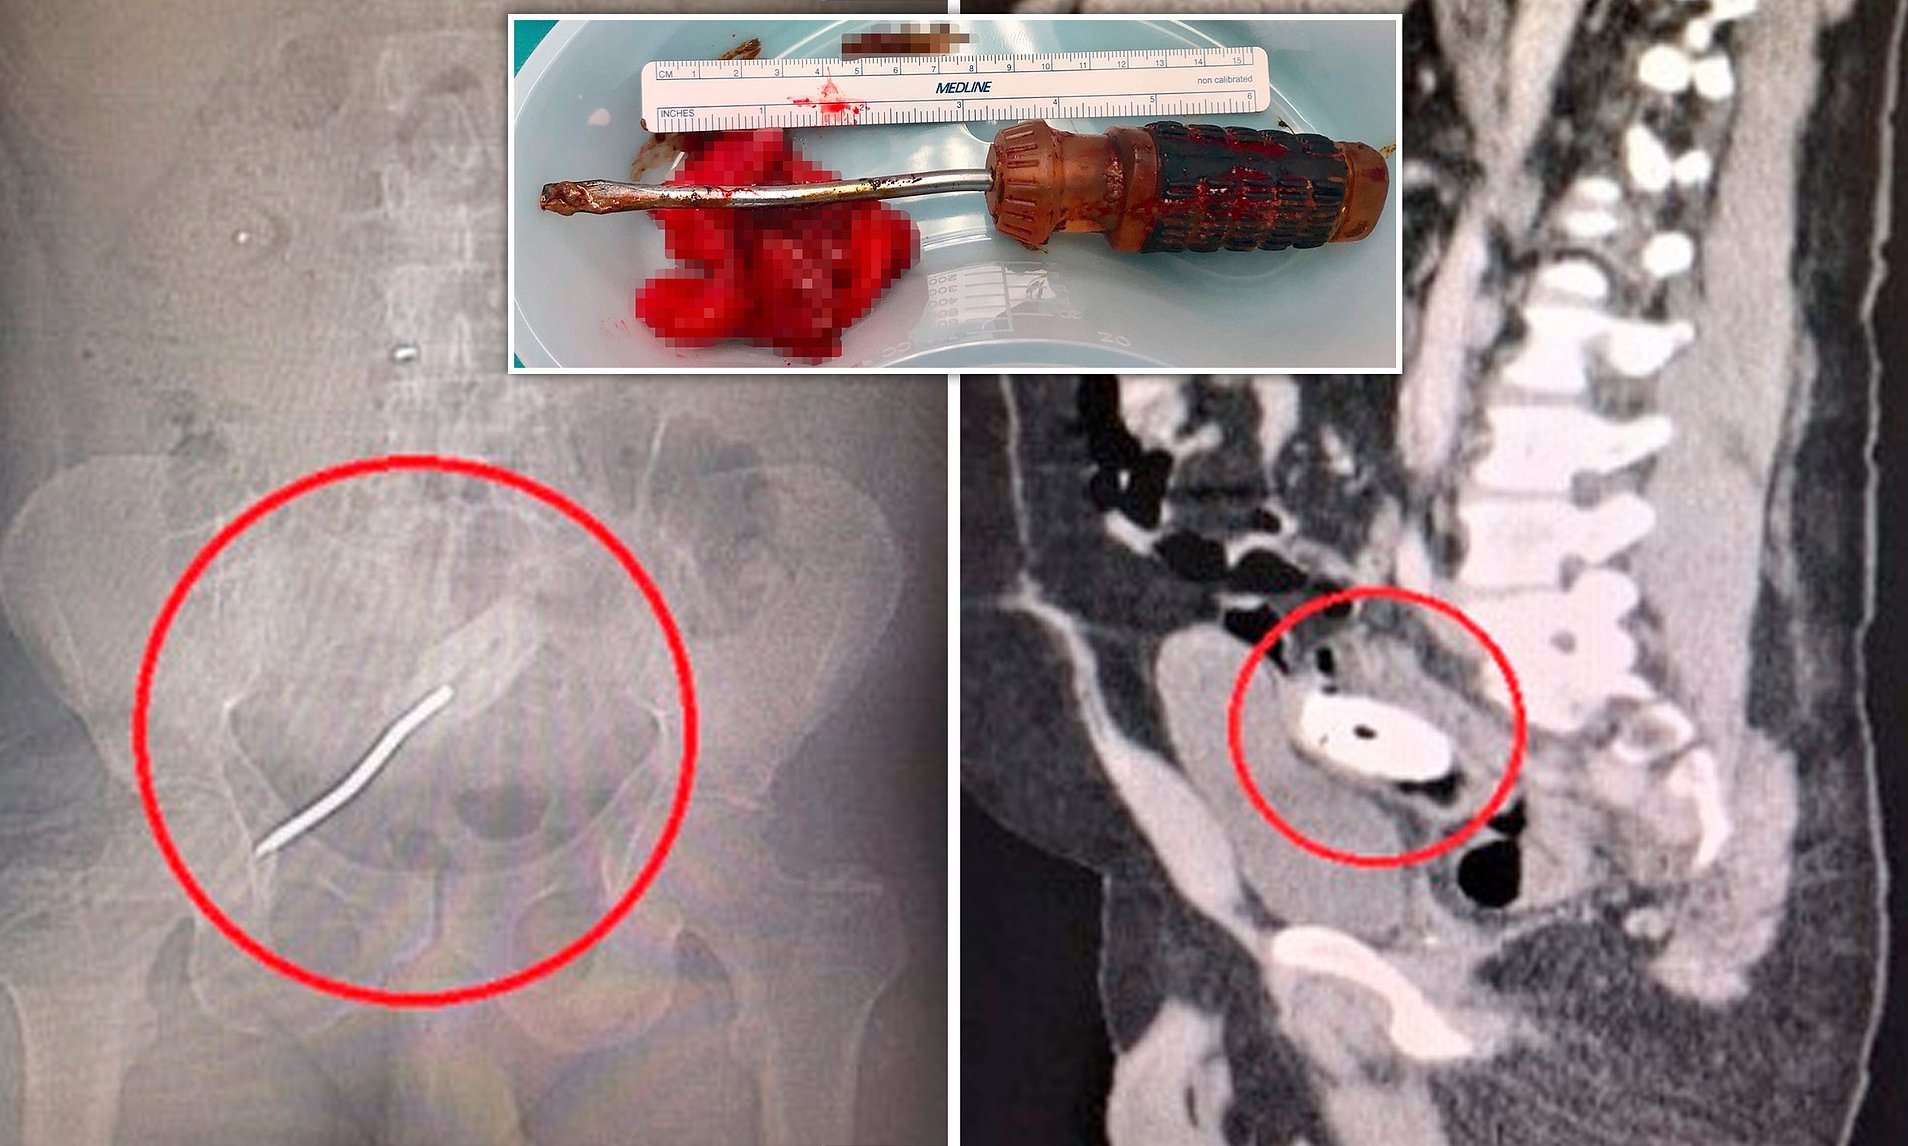 US Doctors Remove 8-inch Screwdriver From Man’s Rectum